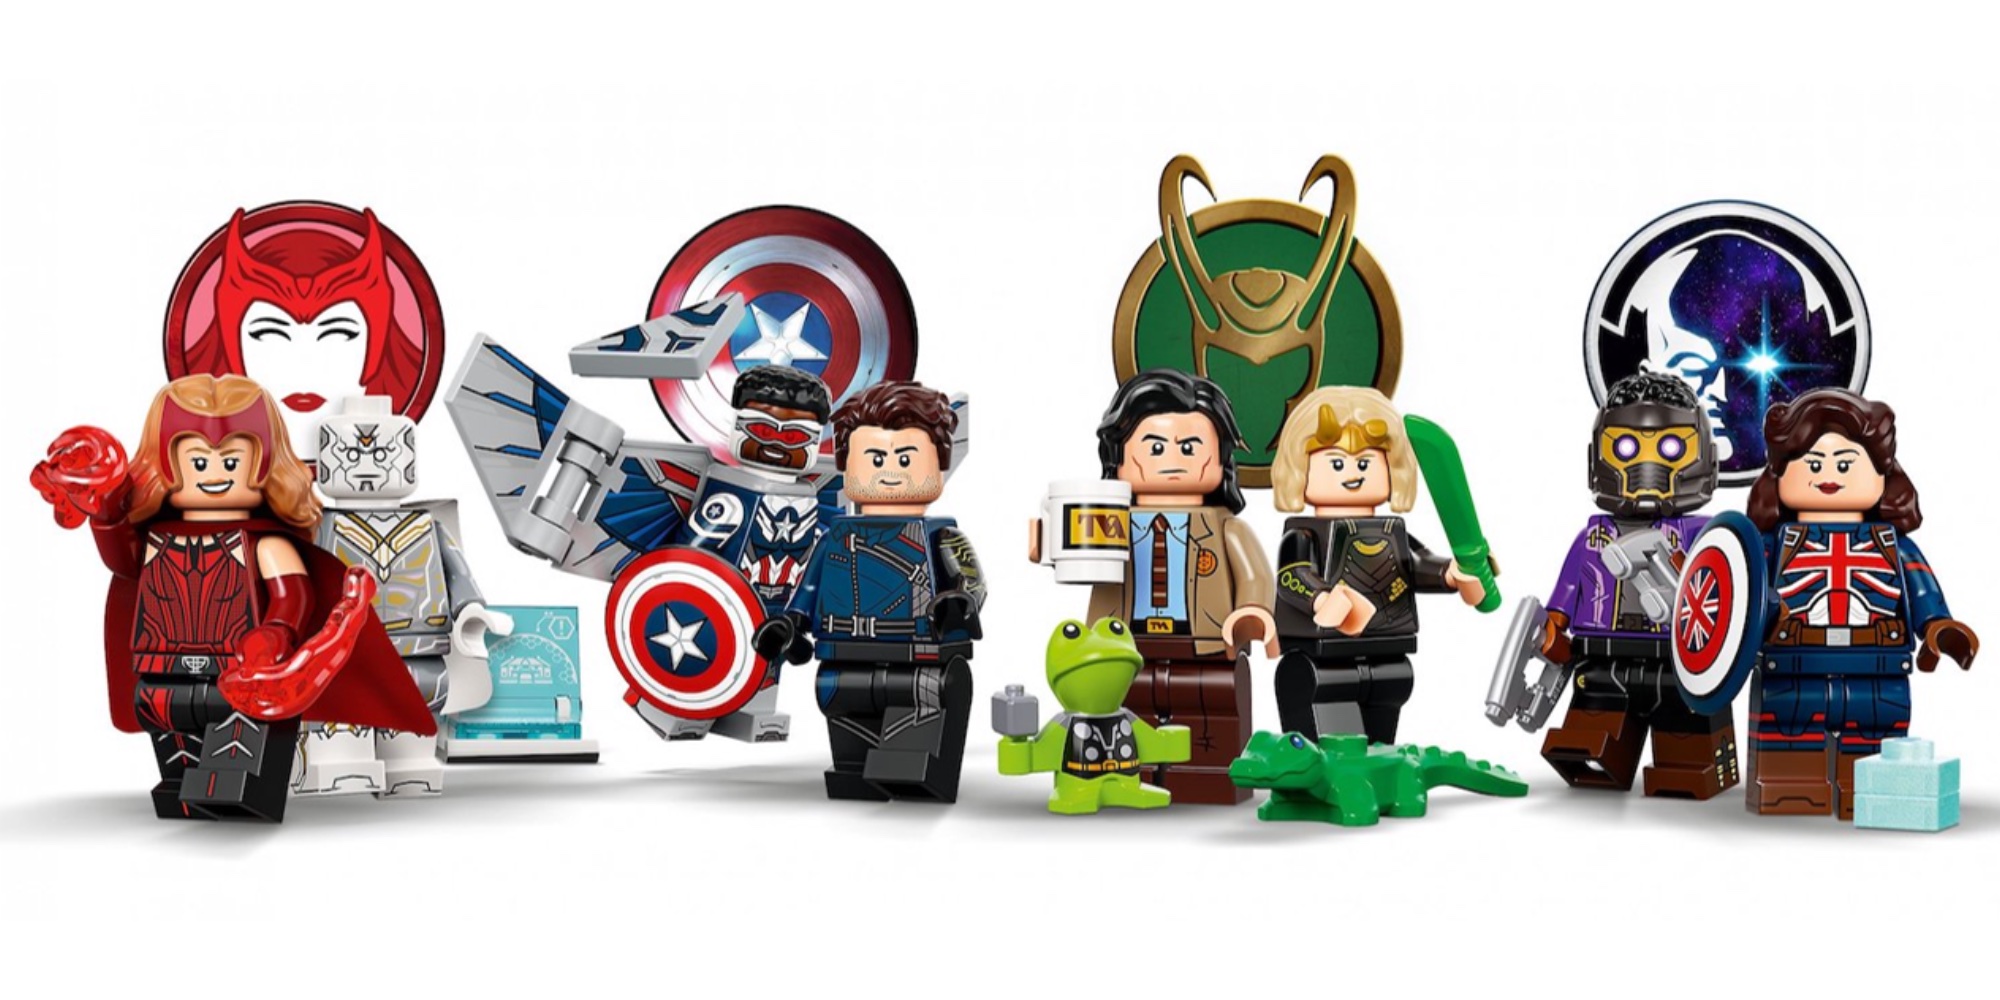 5x Captain America Civil War minis Mini Figures Pack Blind Bags Series 1